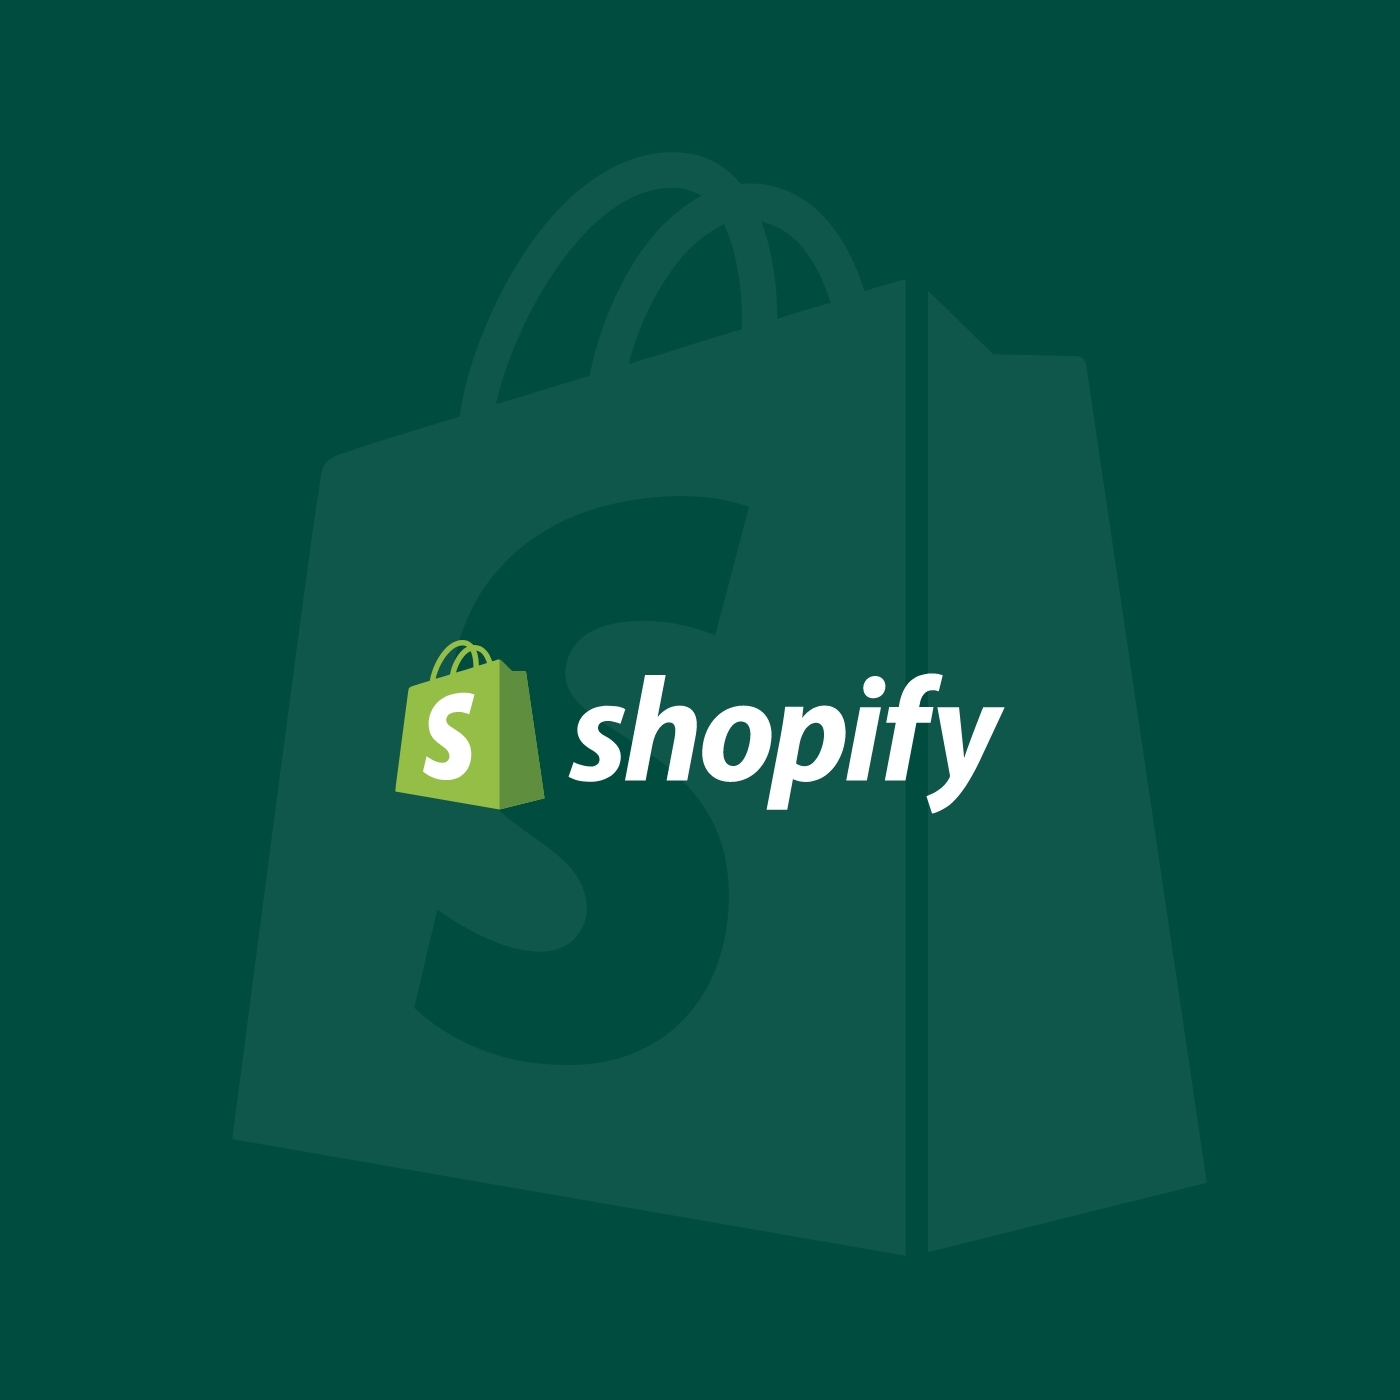 https://www.optimadesign.co.uk/assets/images/common/Shopify_Mobile.jpg